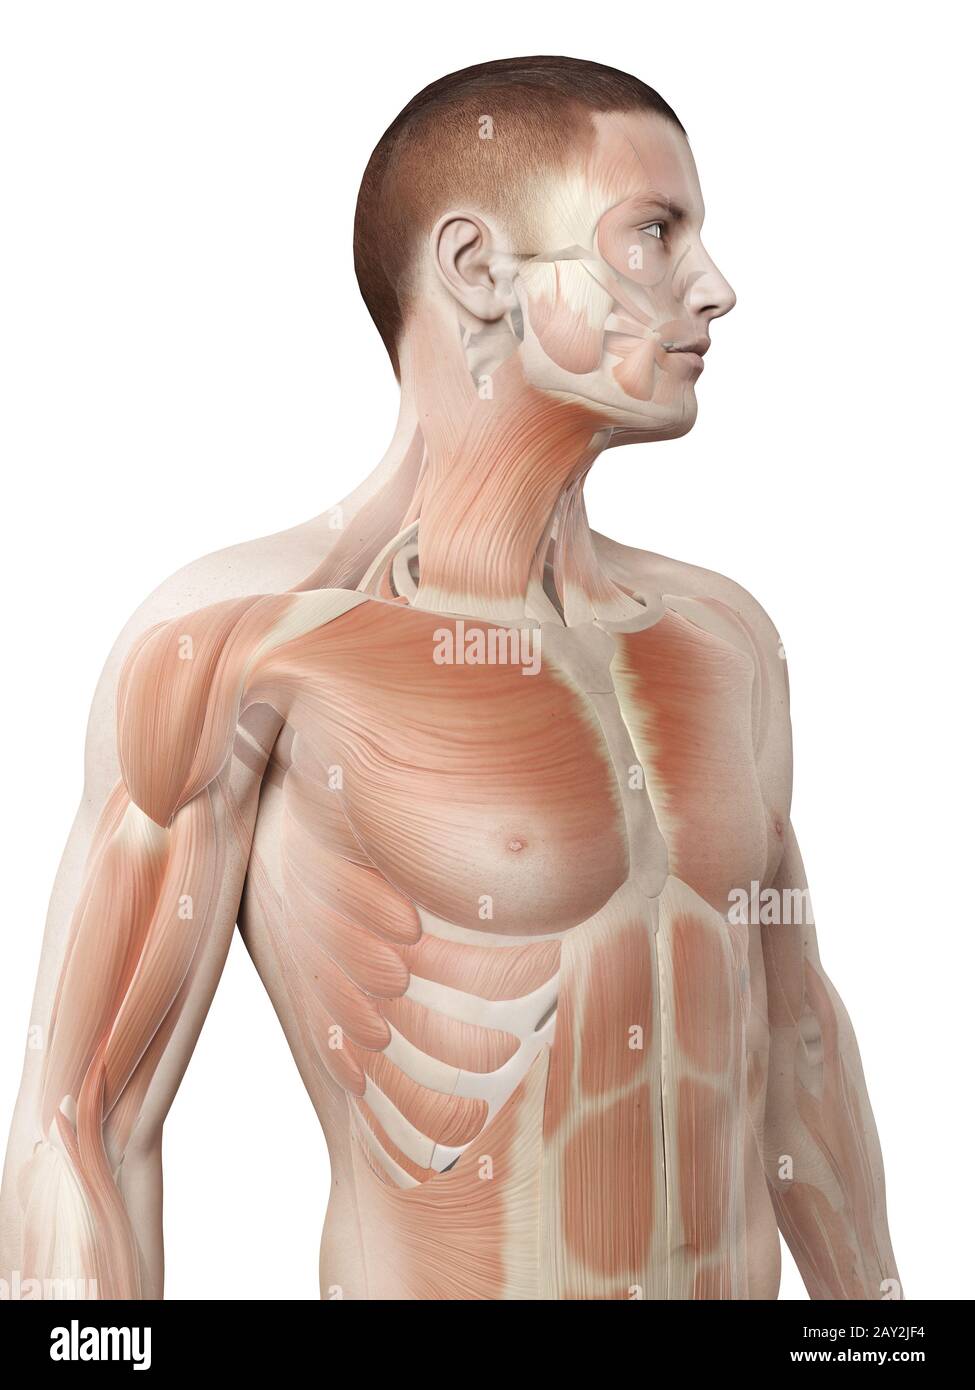 Medizinische 3D-Darstellung - Muskelsystem männlich - Oberkörper Stockfoto